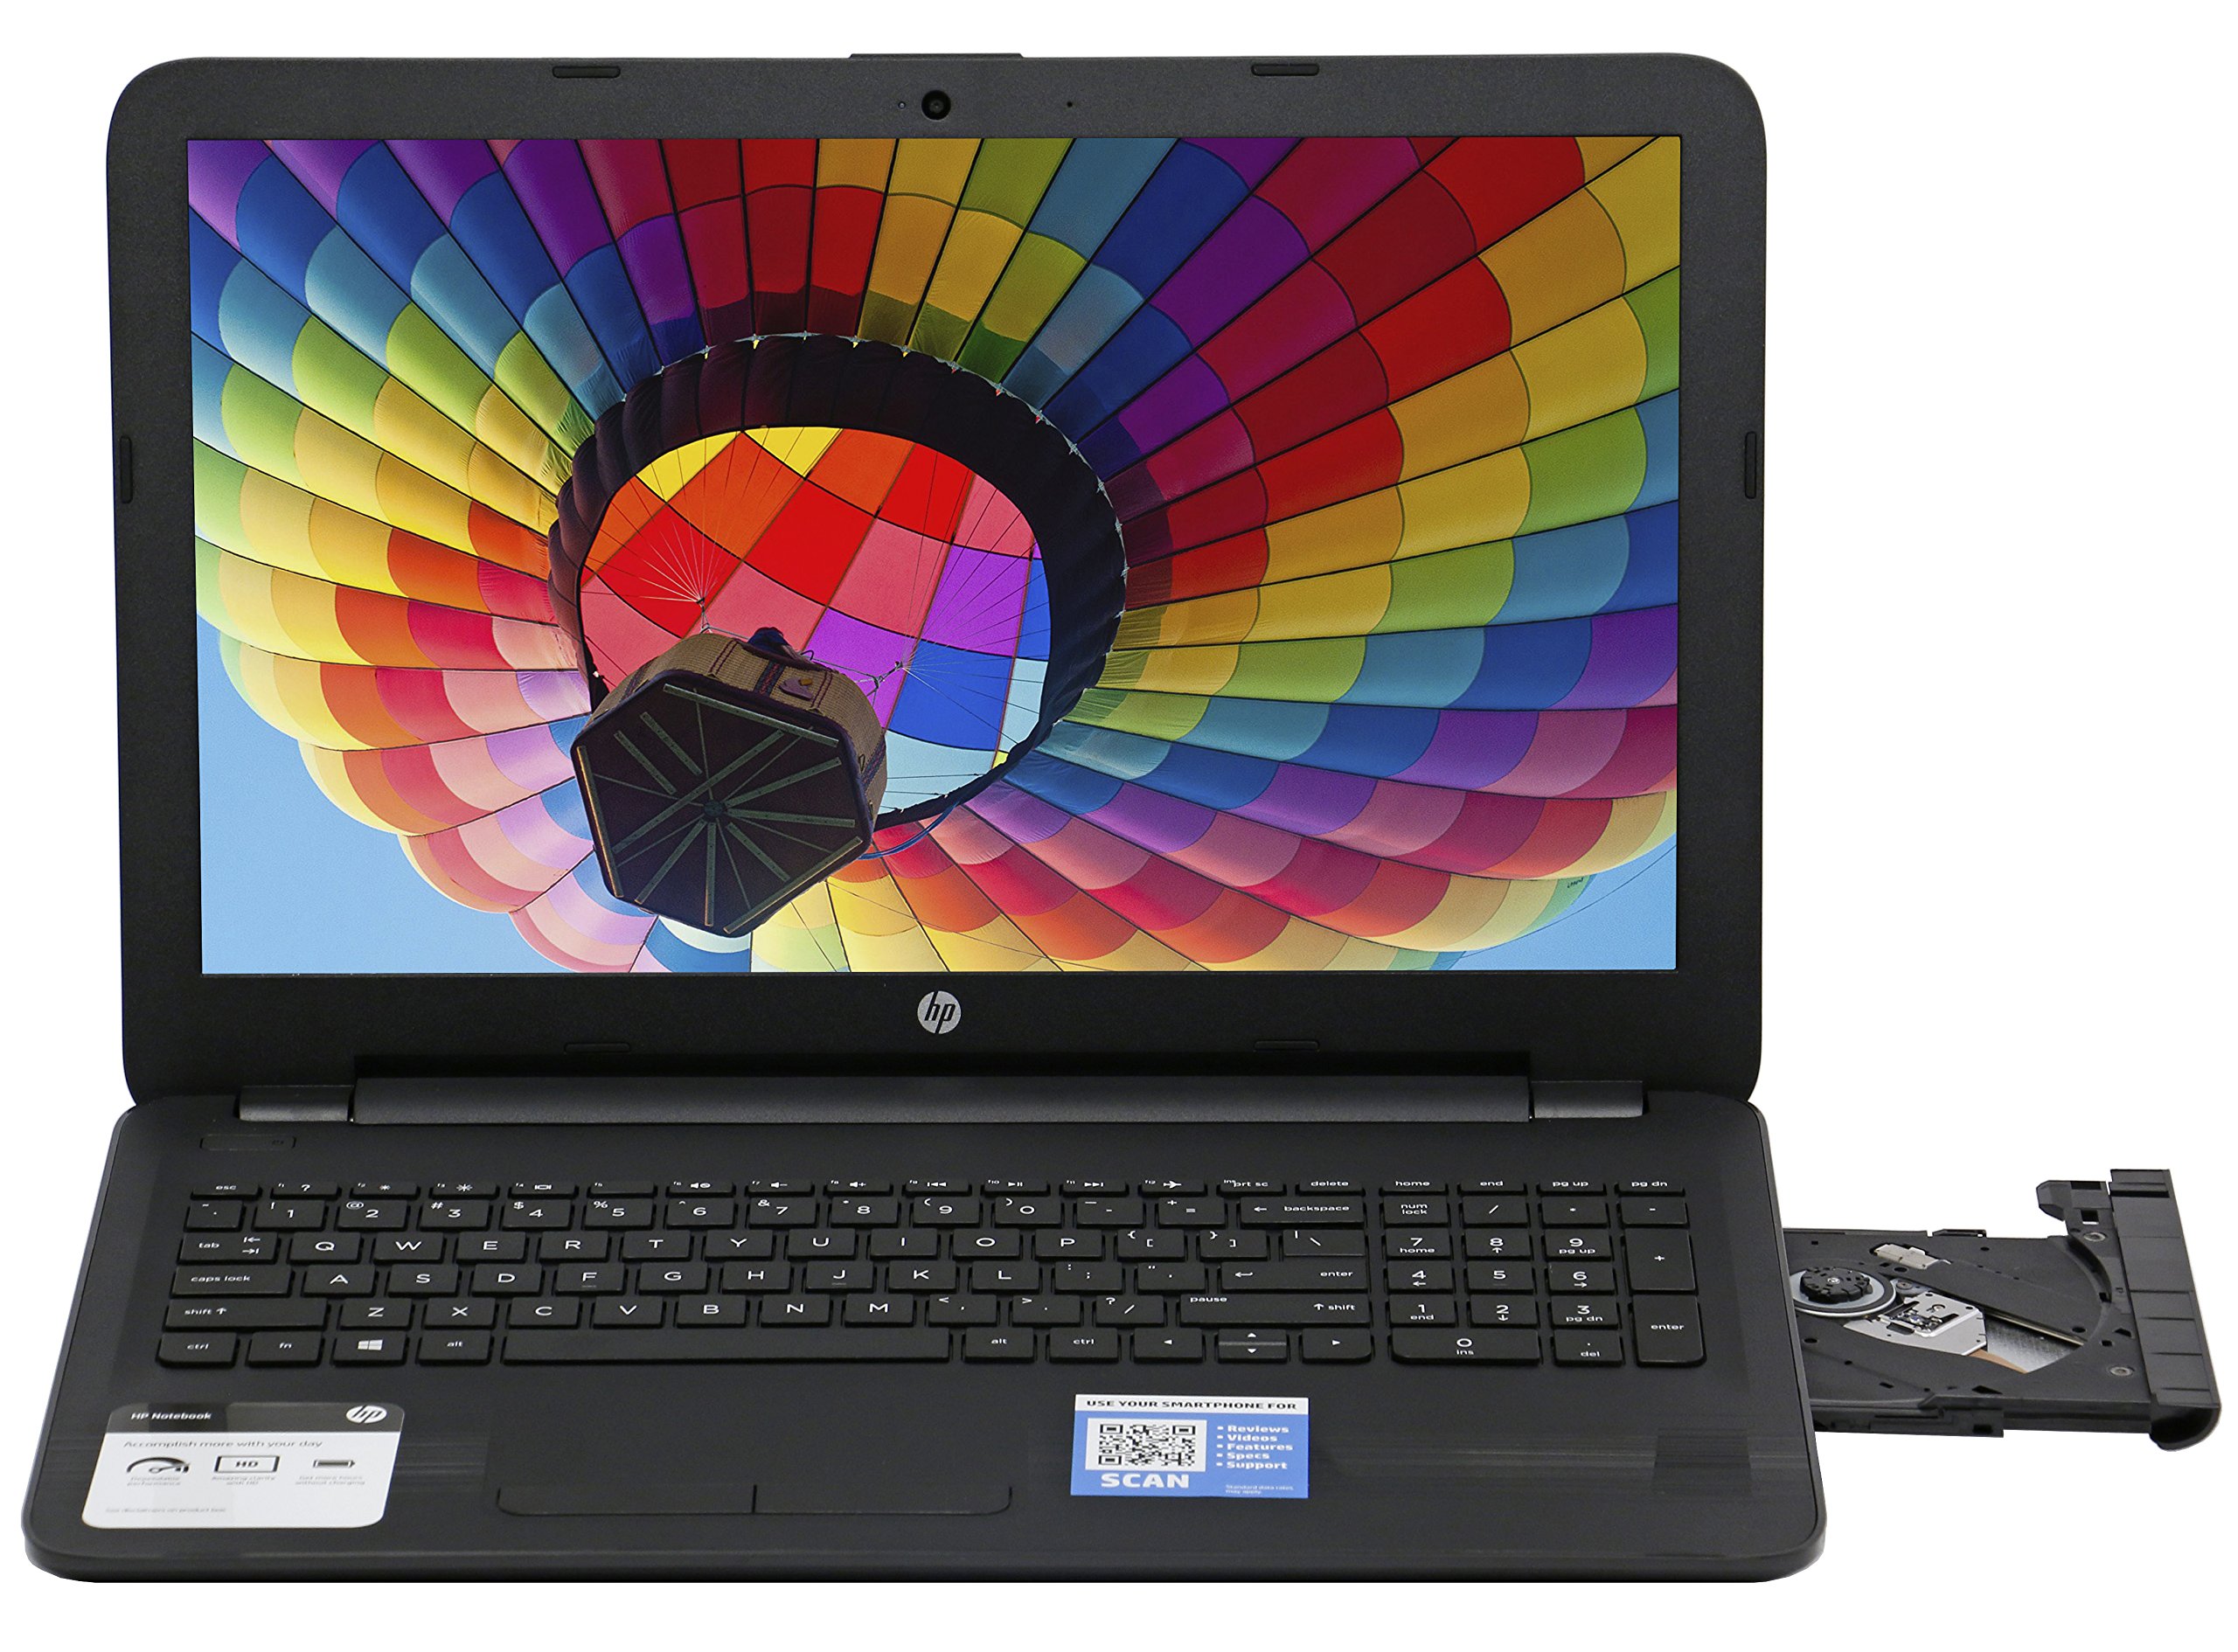 HP Notebook Laptop 15.6 HD Vibrant Display Quad Core AMD E2-7110 APU 1.8GHz 4GB RAM 500GB HDD DVD Windows 10